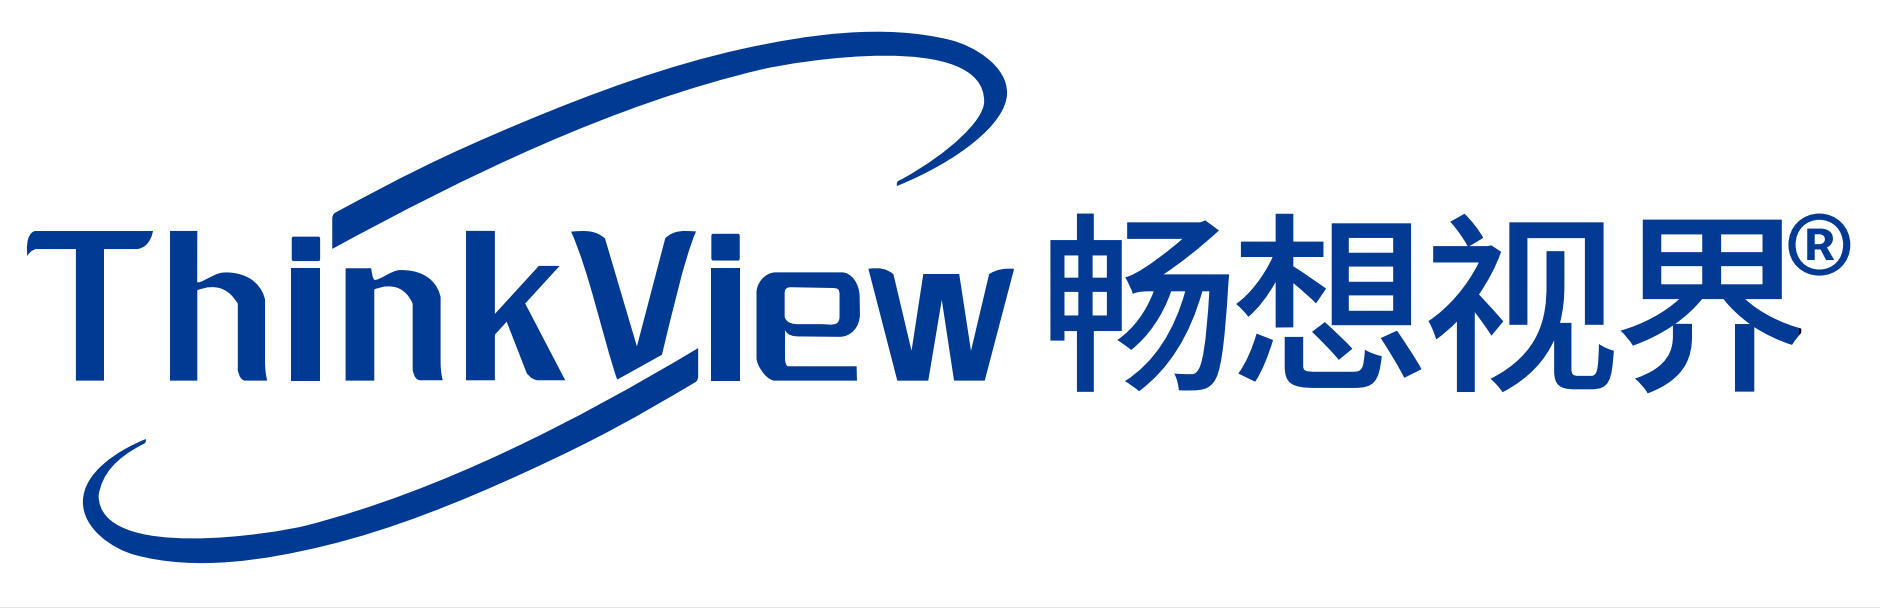 Ang Shenzhen Thinkview Technology Co., Ltd.